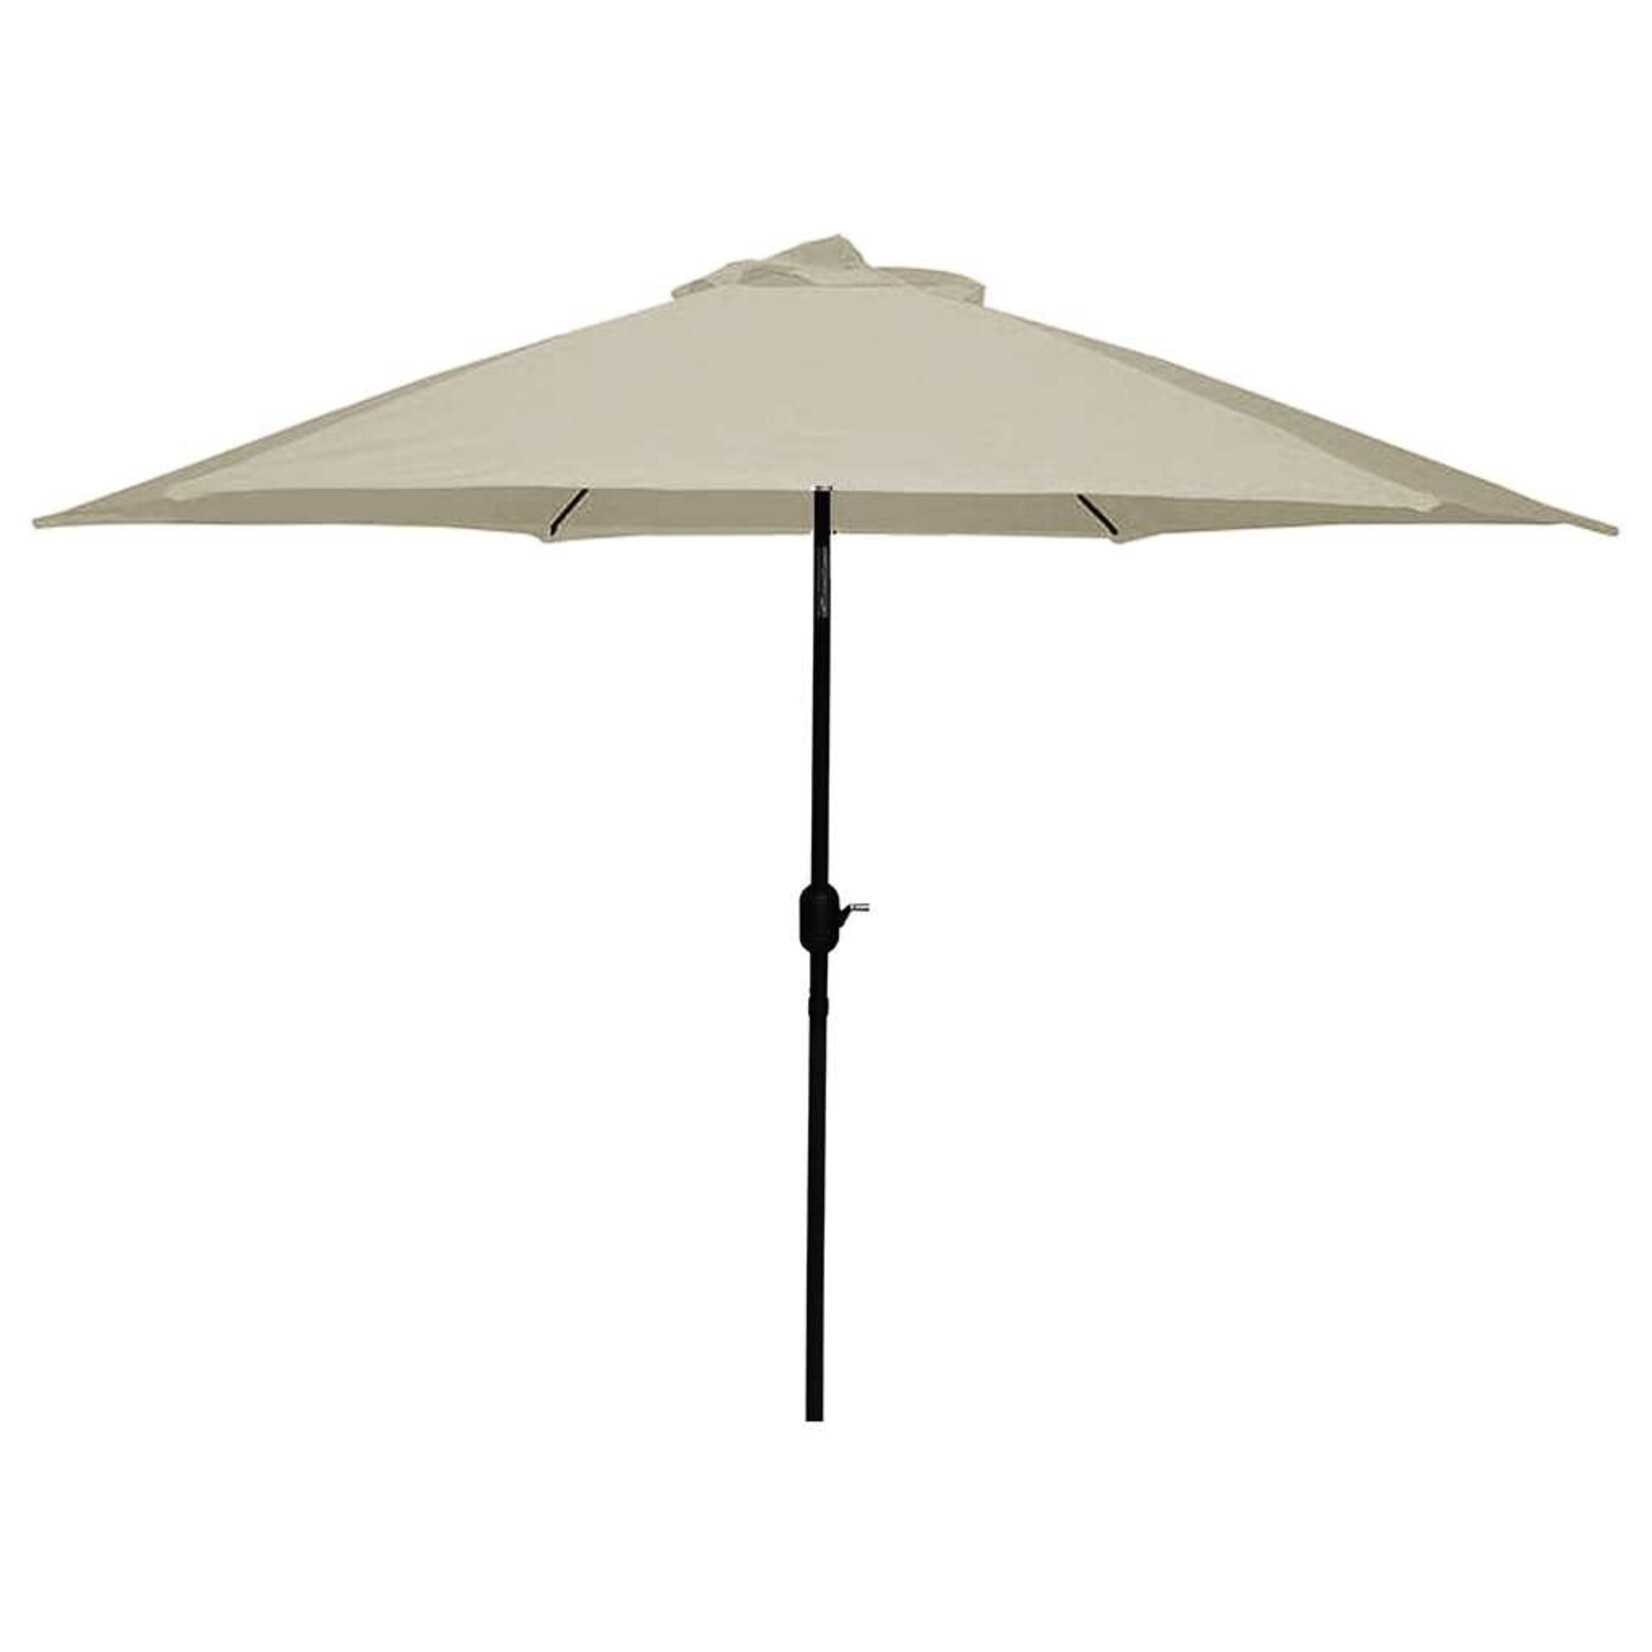 9' Aluminum Umbrella With Crank/Tilt - Linen (Beige)